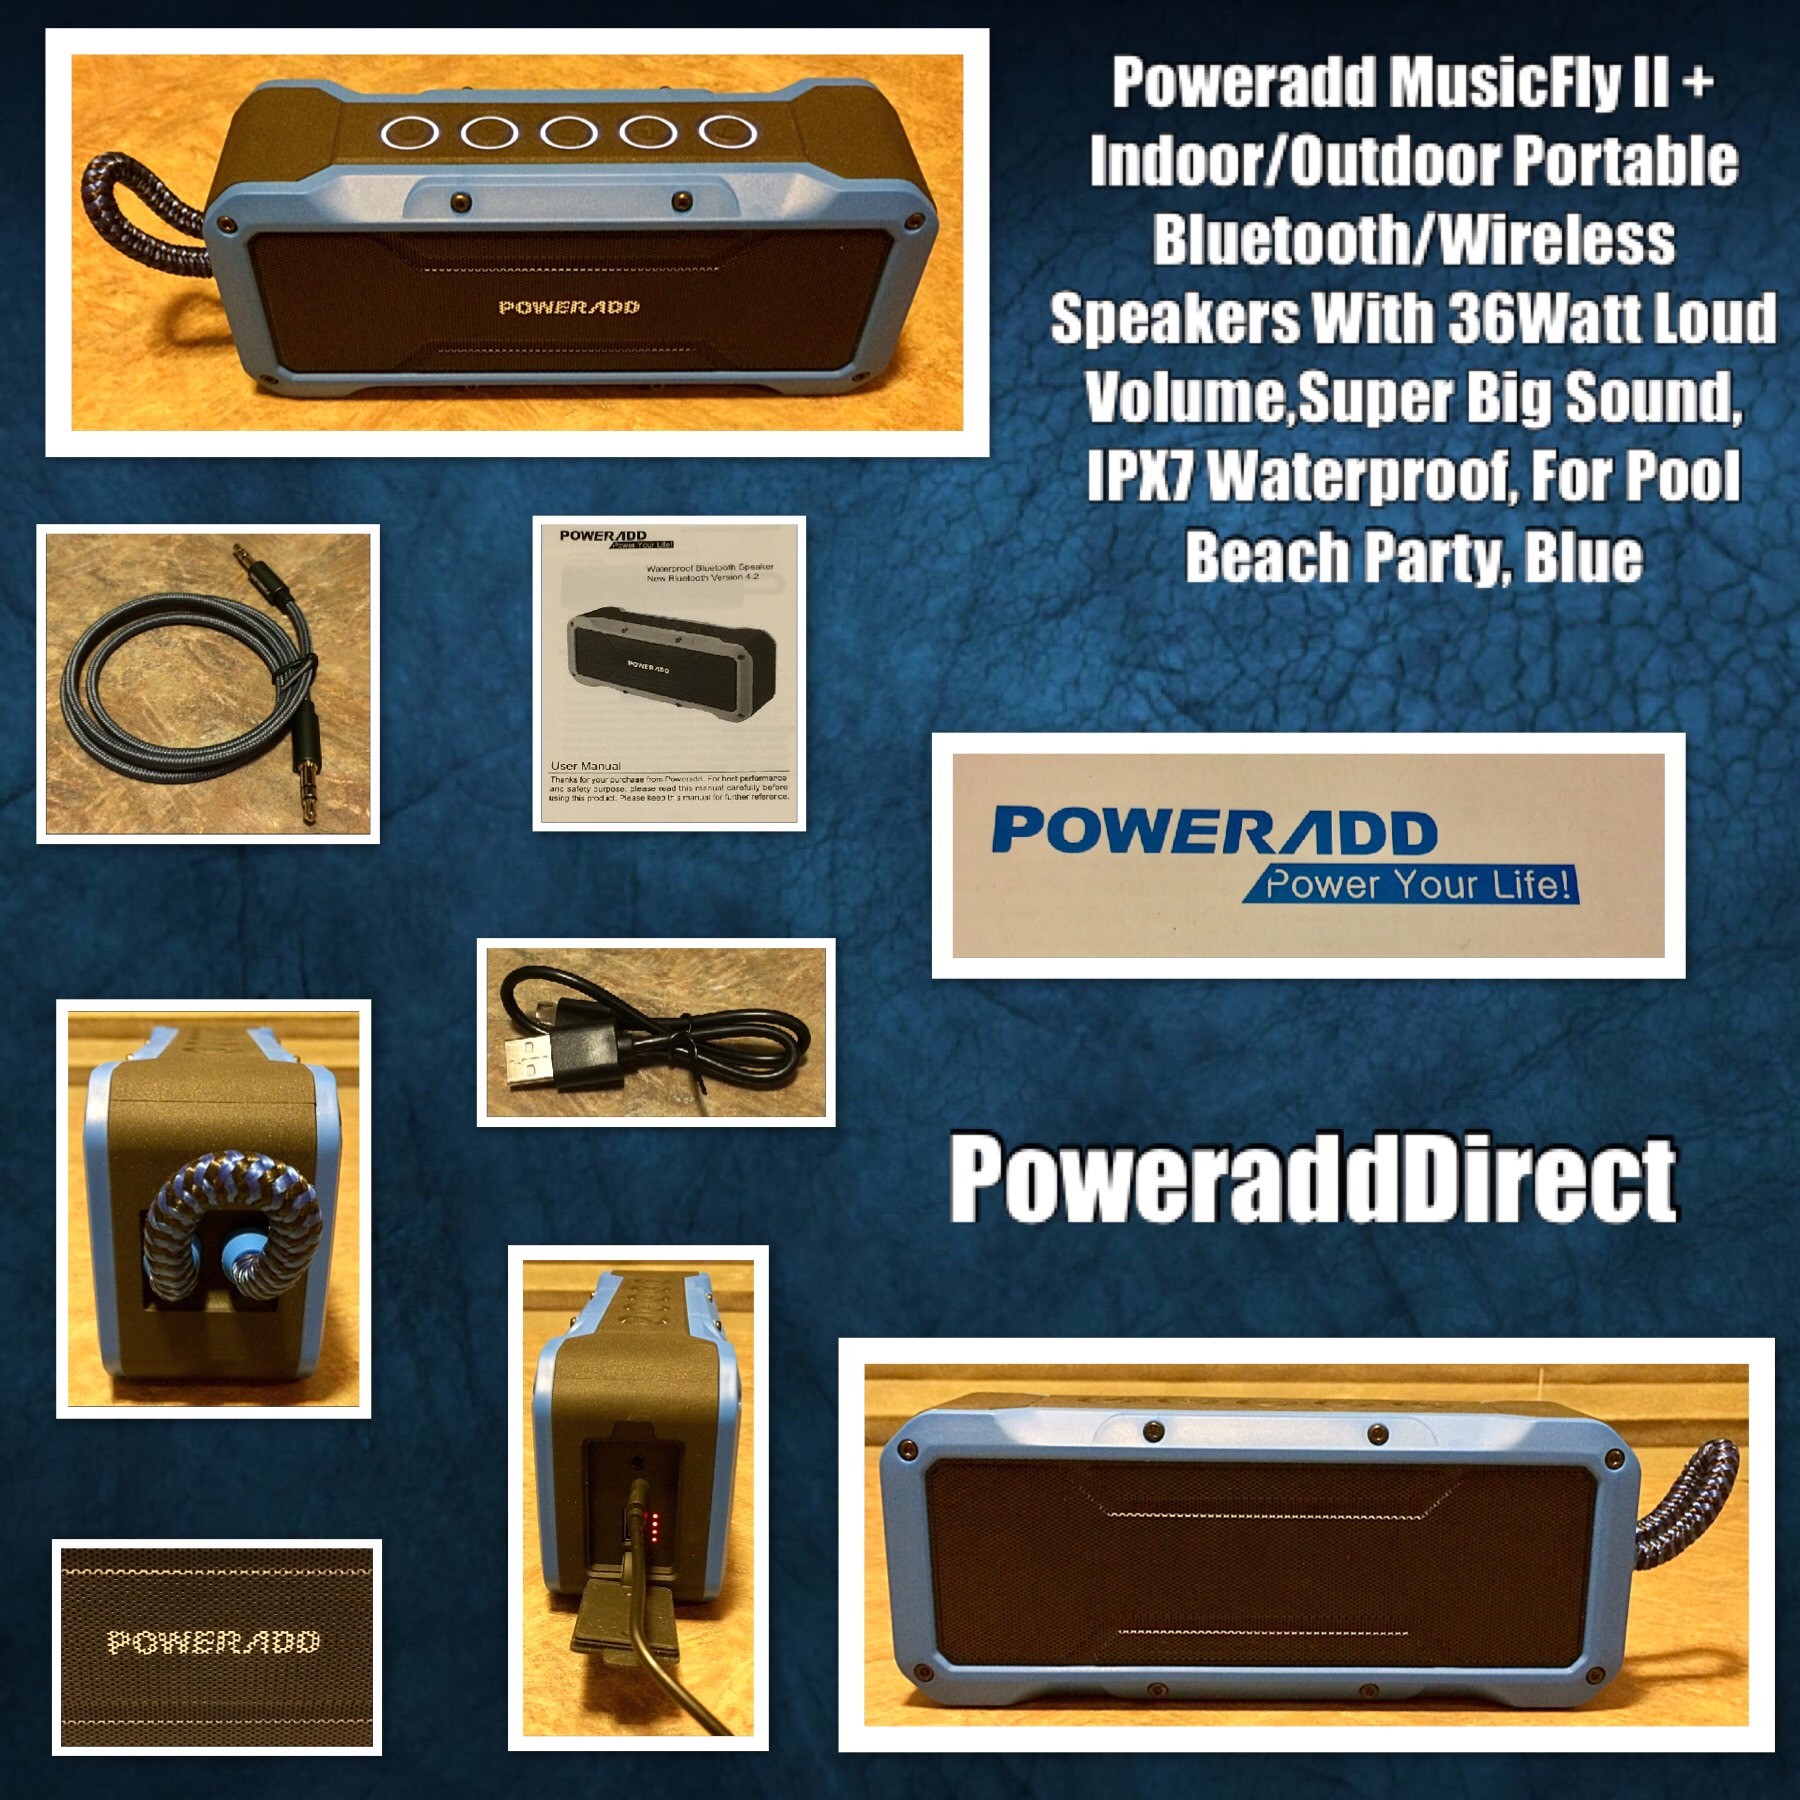 Poweradd MusicFly II + Indoor/Outdoor Portable Bluetooth Wireless Speakers With 36 Watt Loud Volume, Super Big Sound, IPX7 Waterproof, For Pool Beach Party, Blue